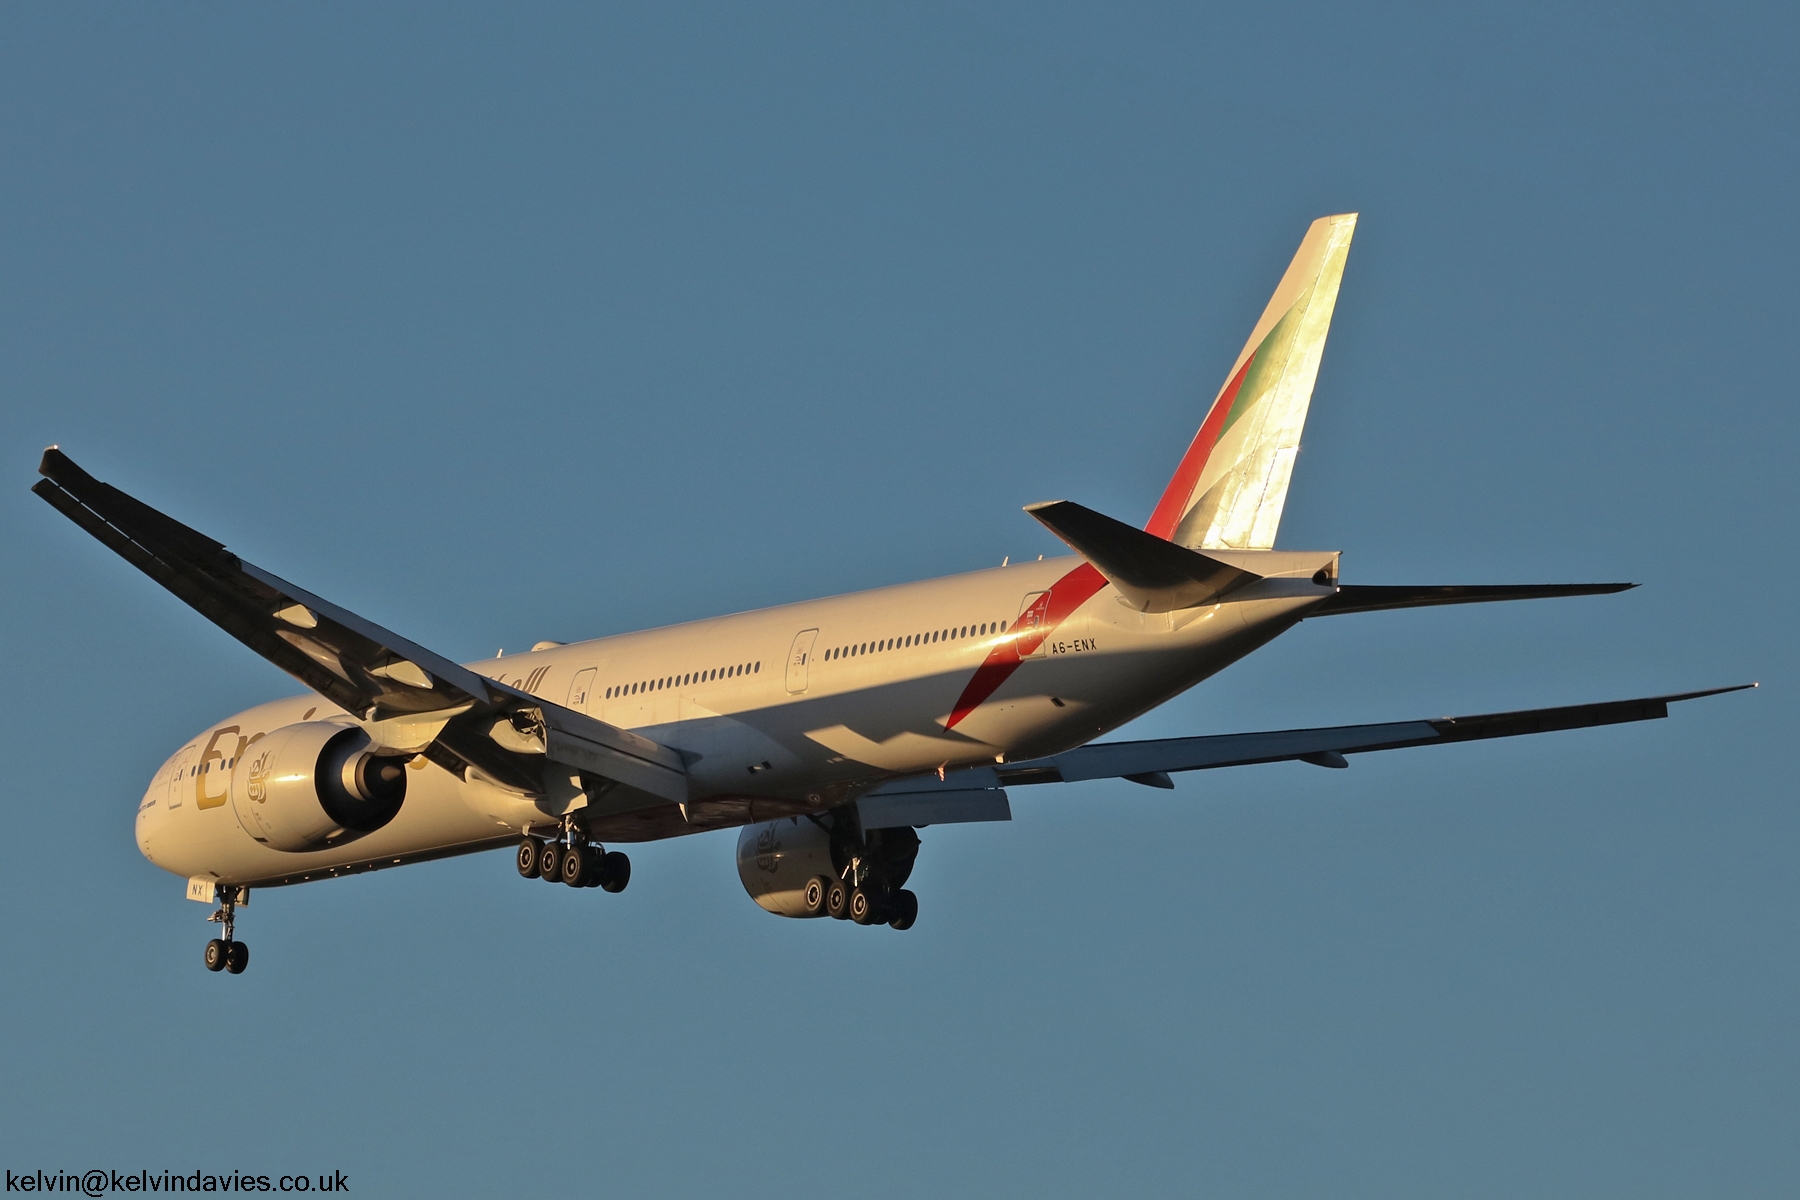 Emirates 777 A6-ENX